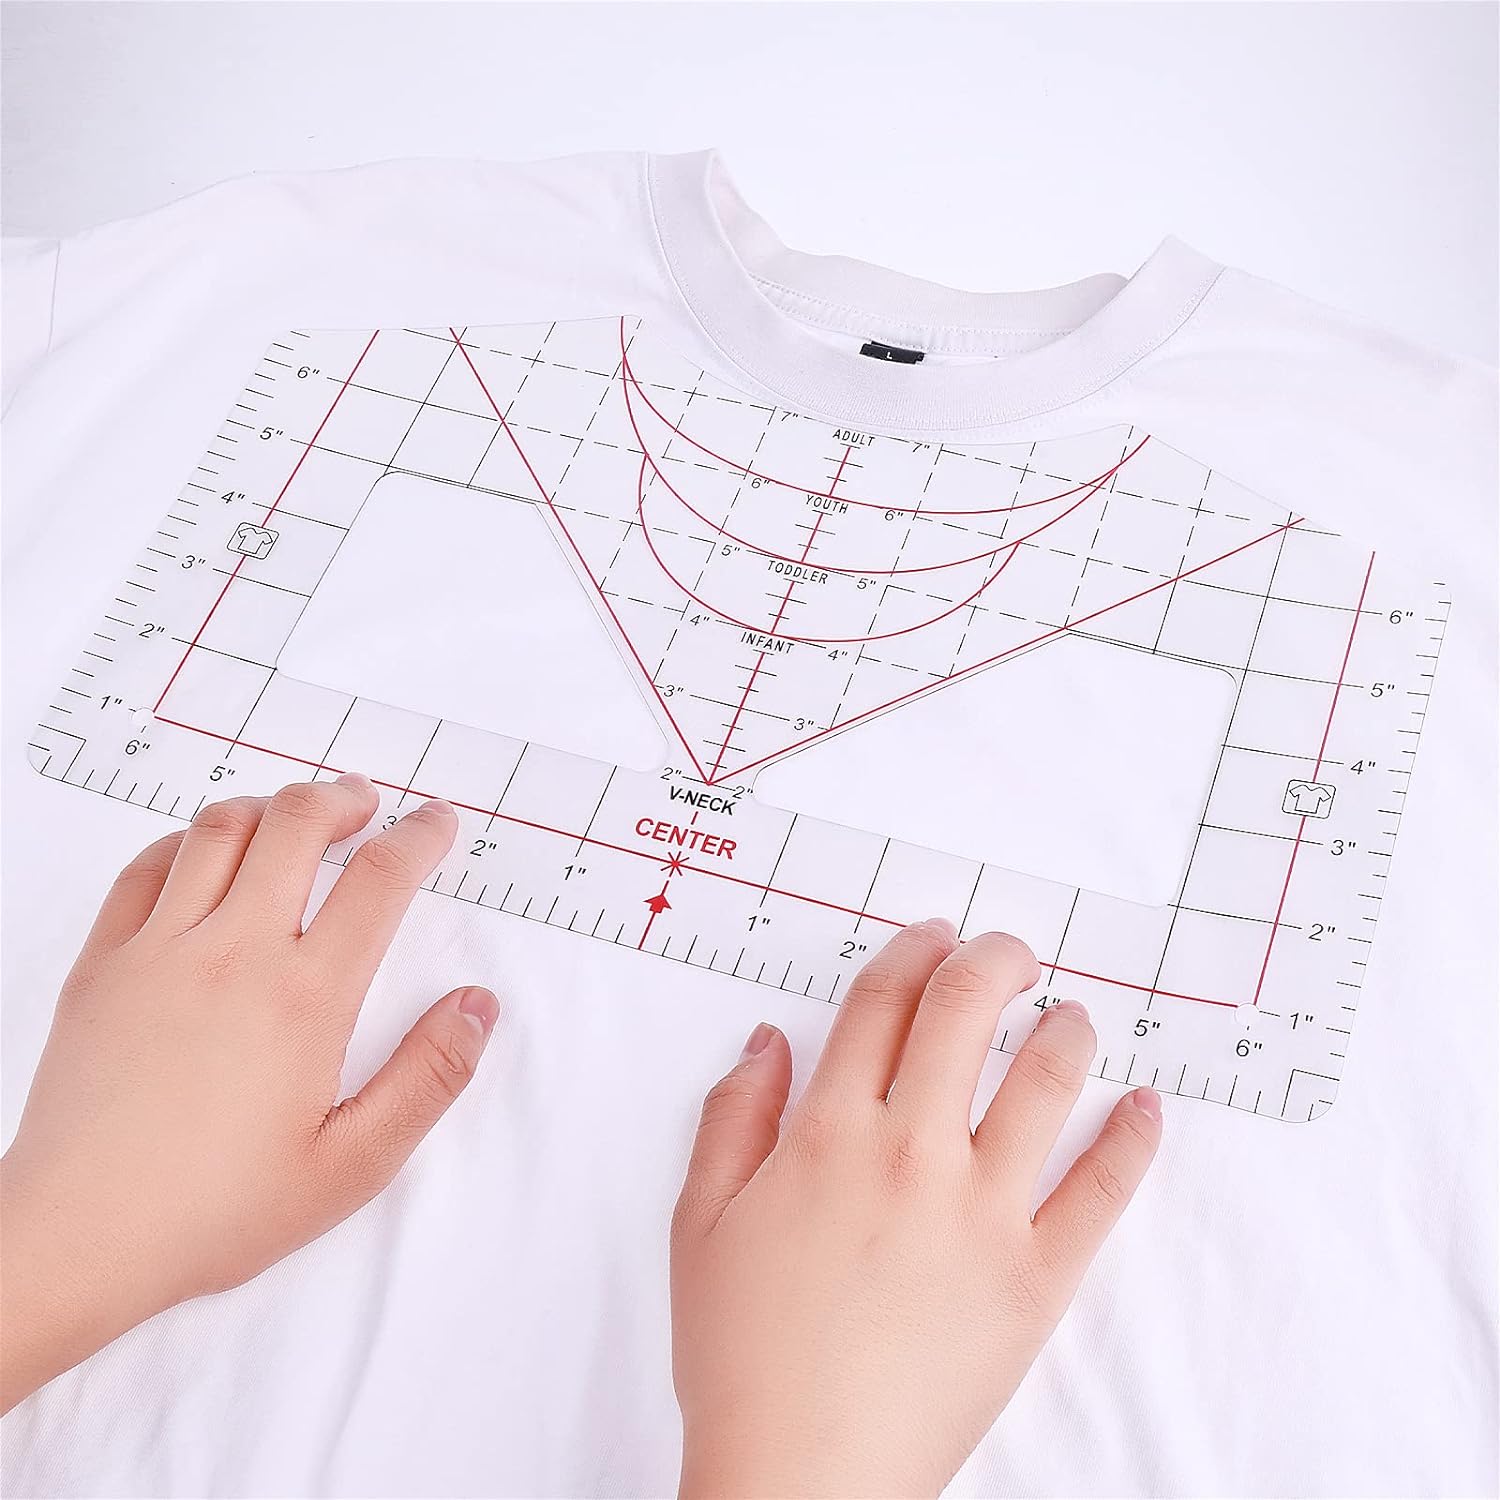  Tshirt Ruler Guide For Vinyl Alignment, 13pcs Shirt